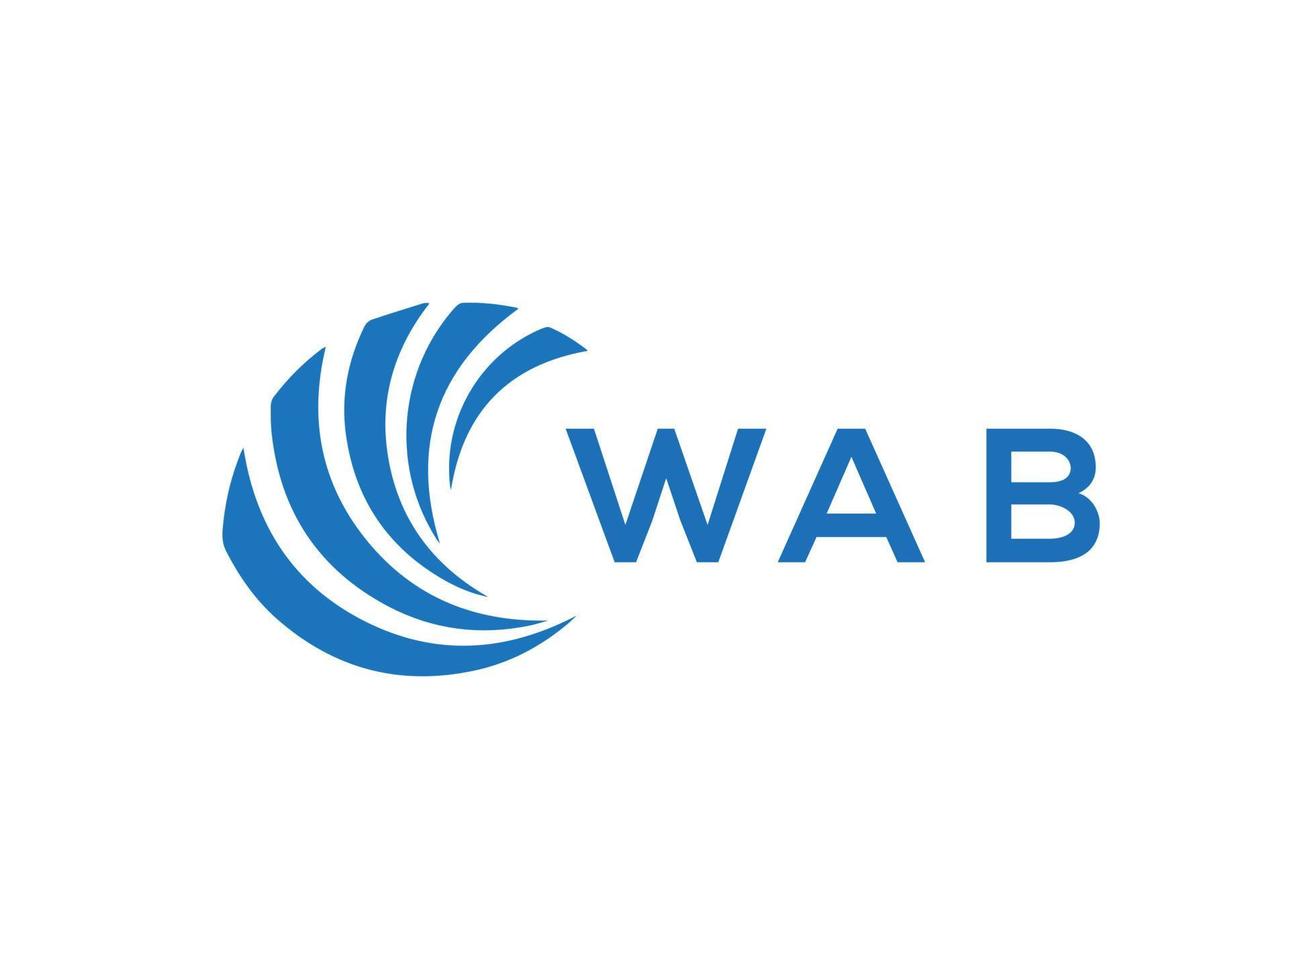 wab lettera logo design su bianca sfondo. wab creativo cerchio lettera logo concetto. wab lettera design. vettore